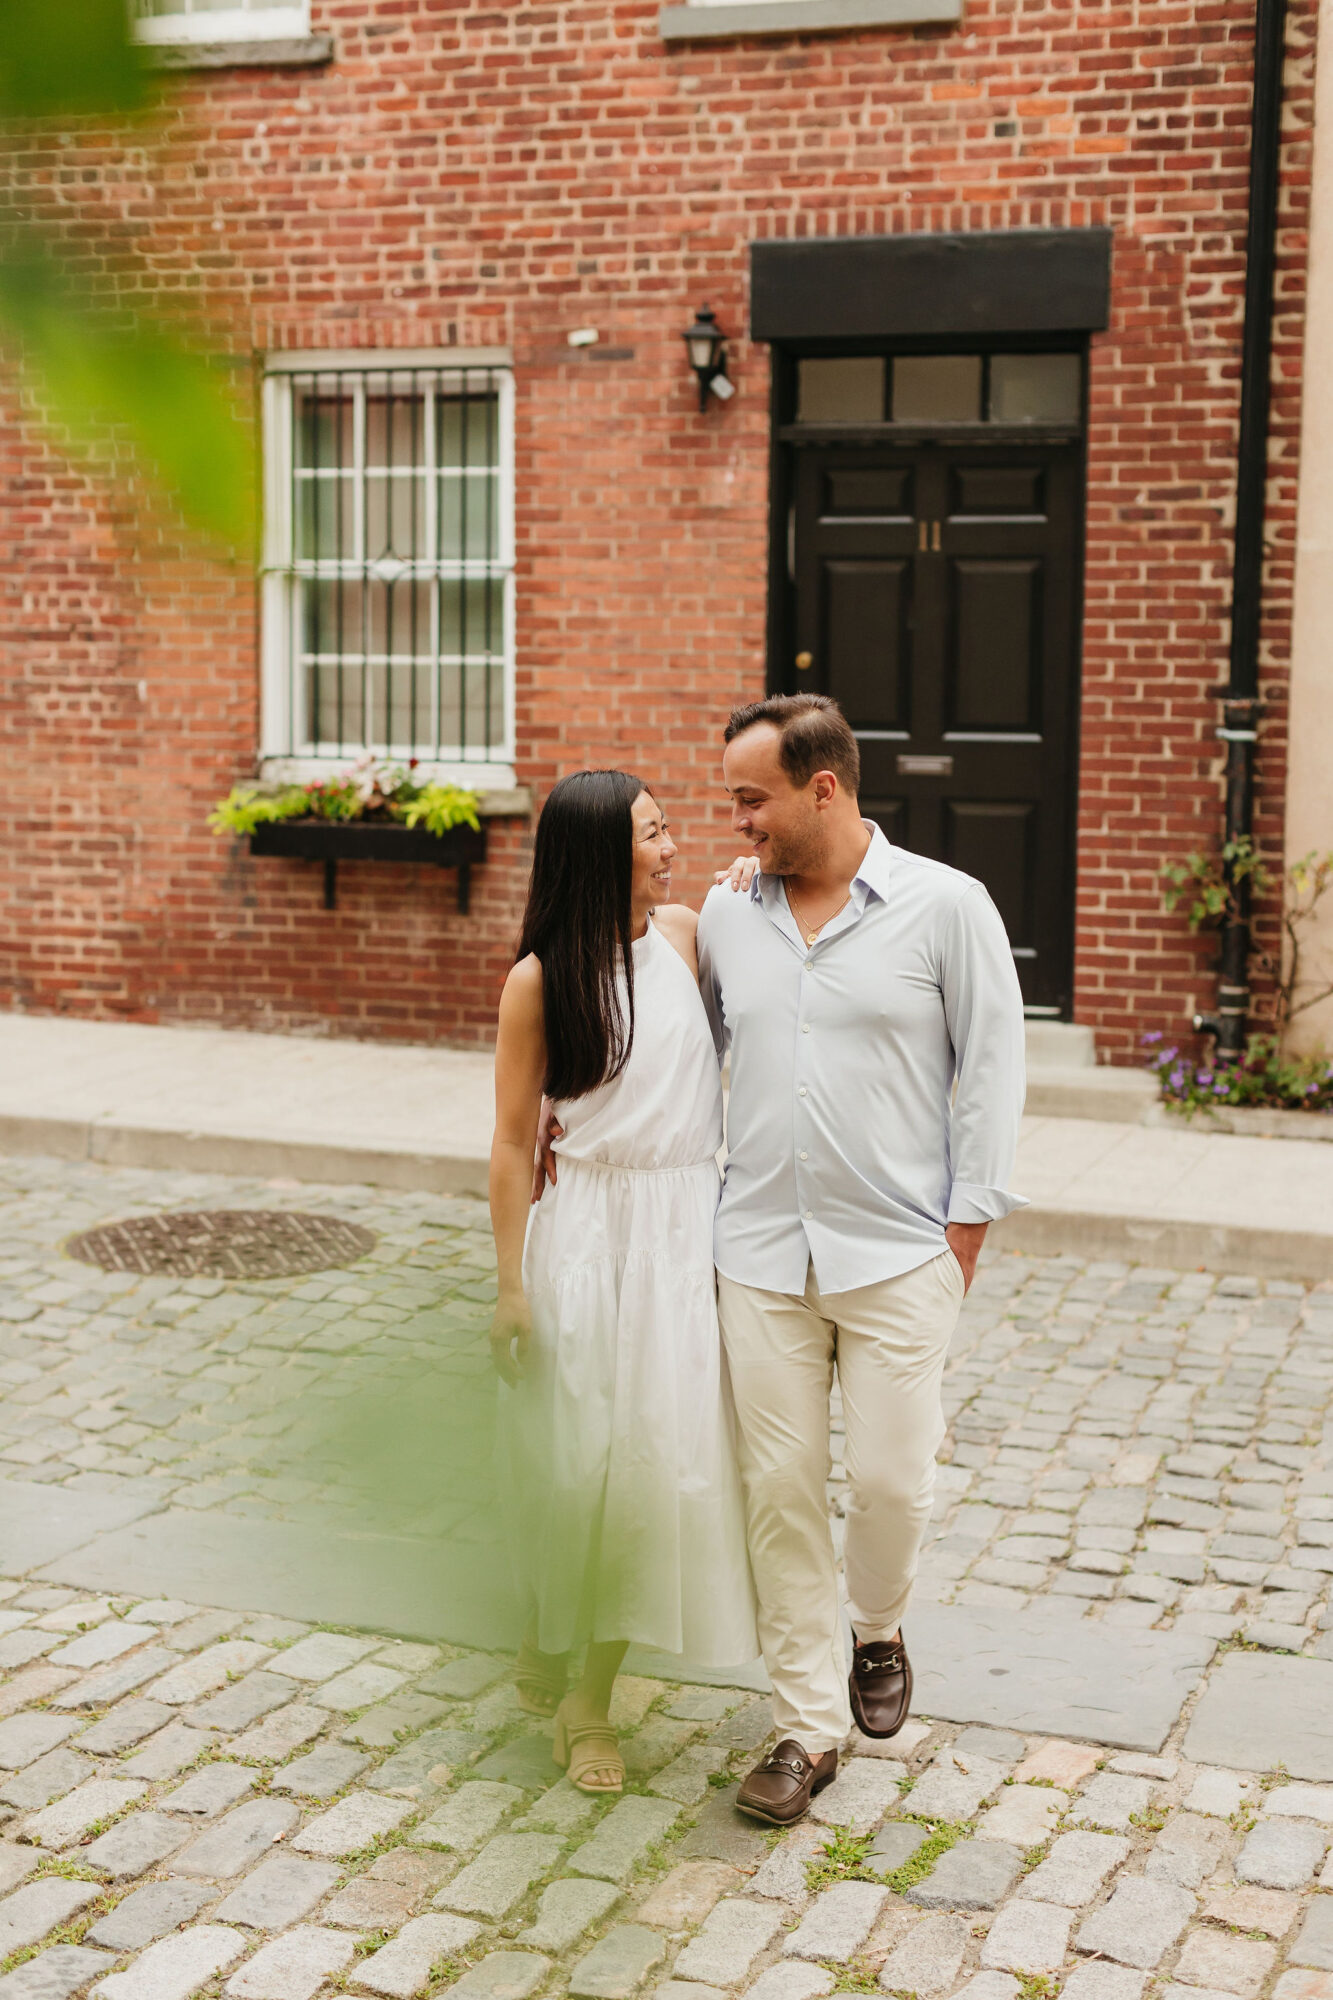 greenwich village, engagement photos, new york city streets, white dress